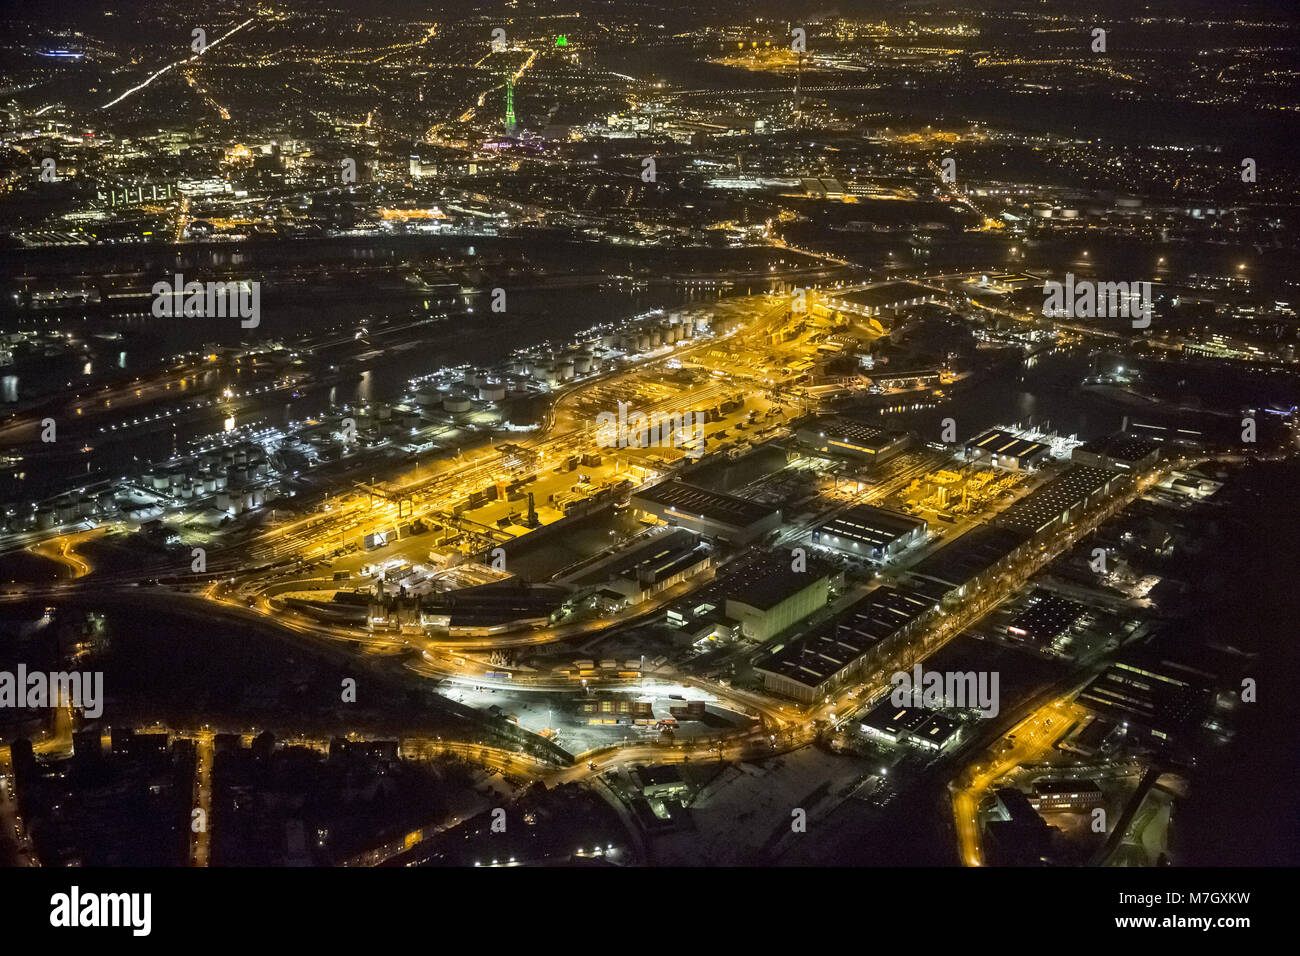 Aerial view, night scene, Ruhr port Duisport at night, dysentery, Port of Duisburg, Duisburg, Ruhr, Nordrhein-Westfalen, Germany, Europe, birds-eyes v Stock Photo